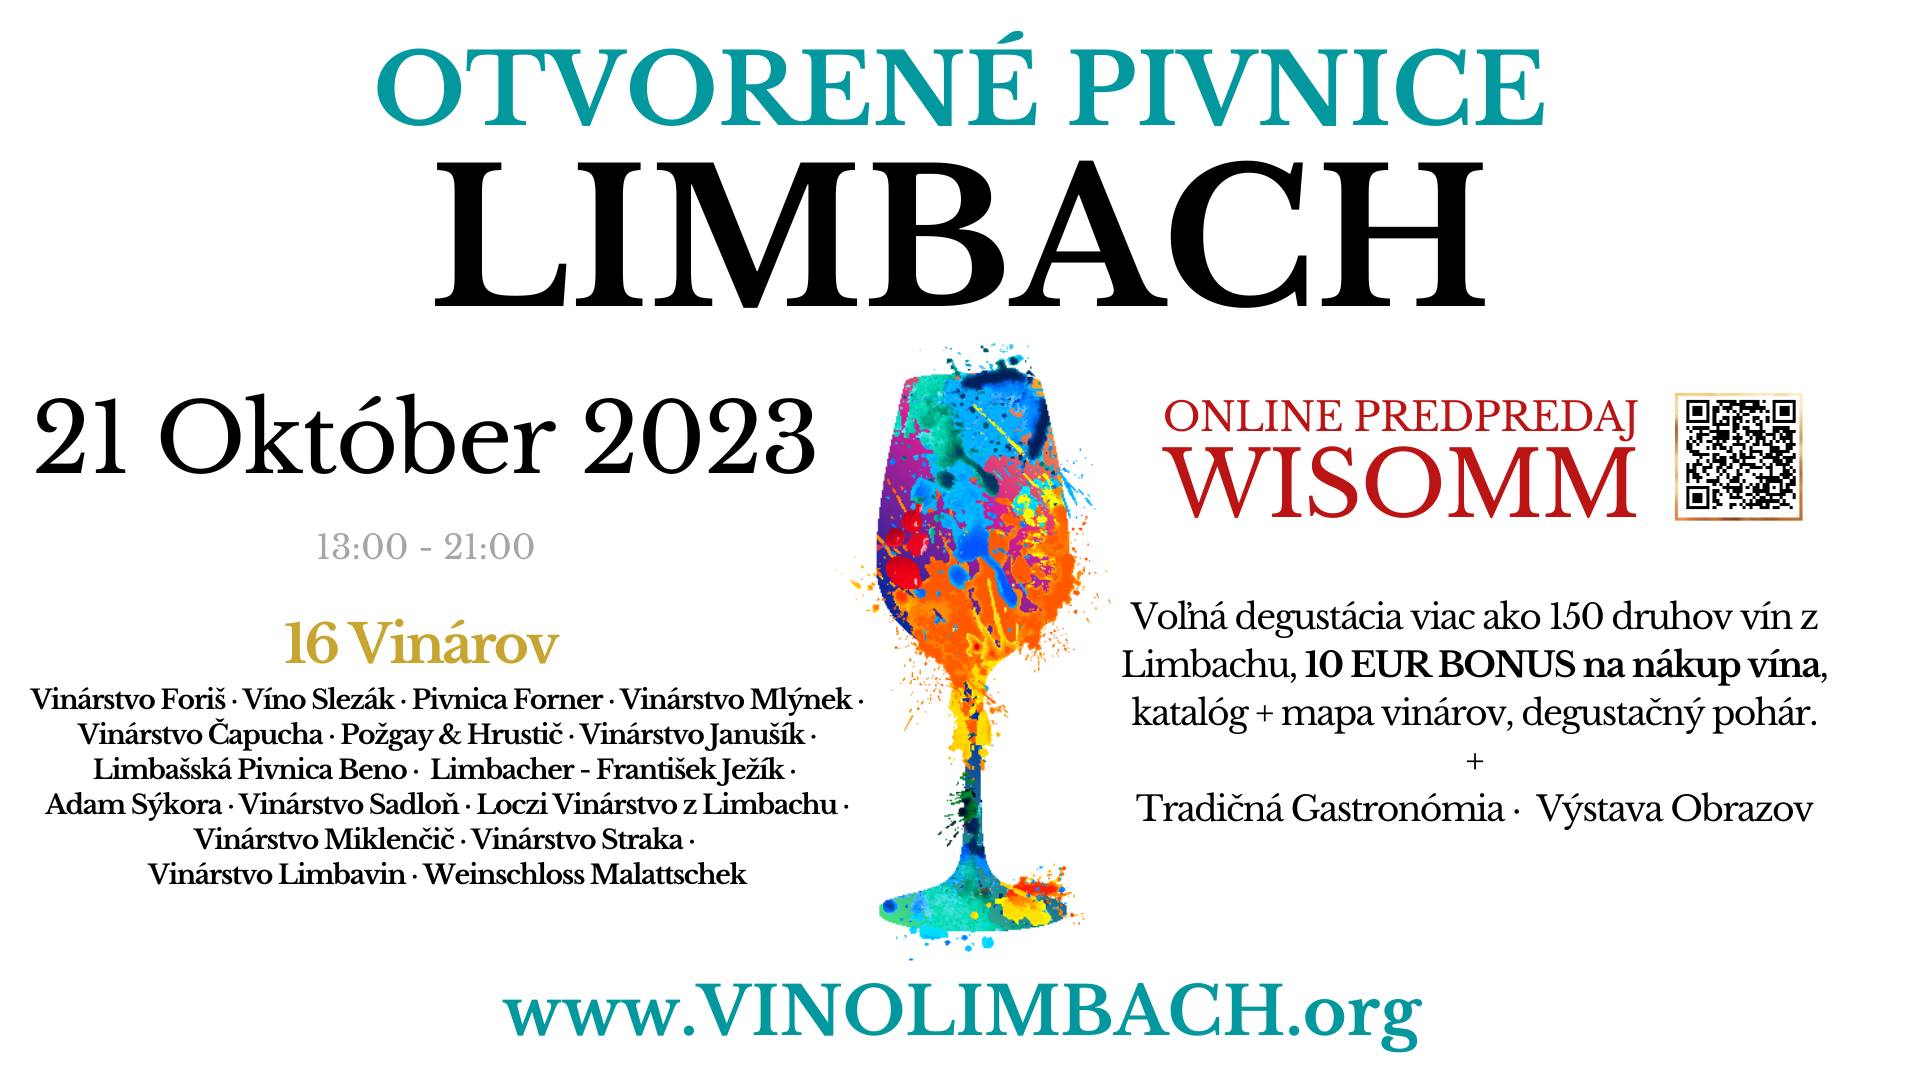 Otvorené pivnice Limbach 2023